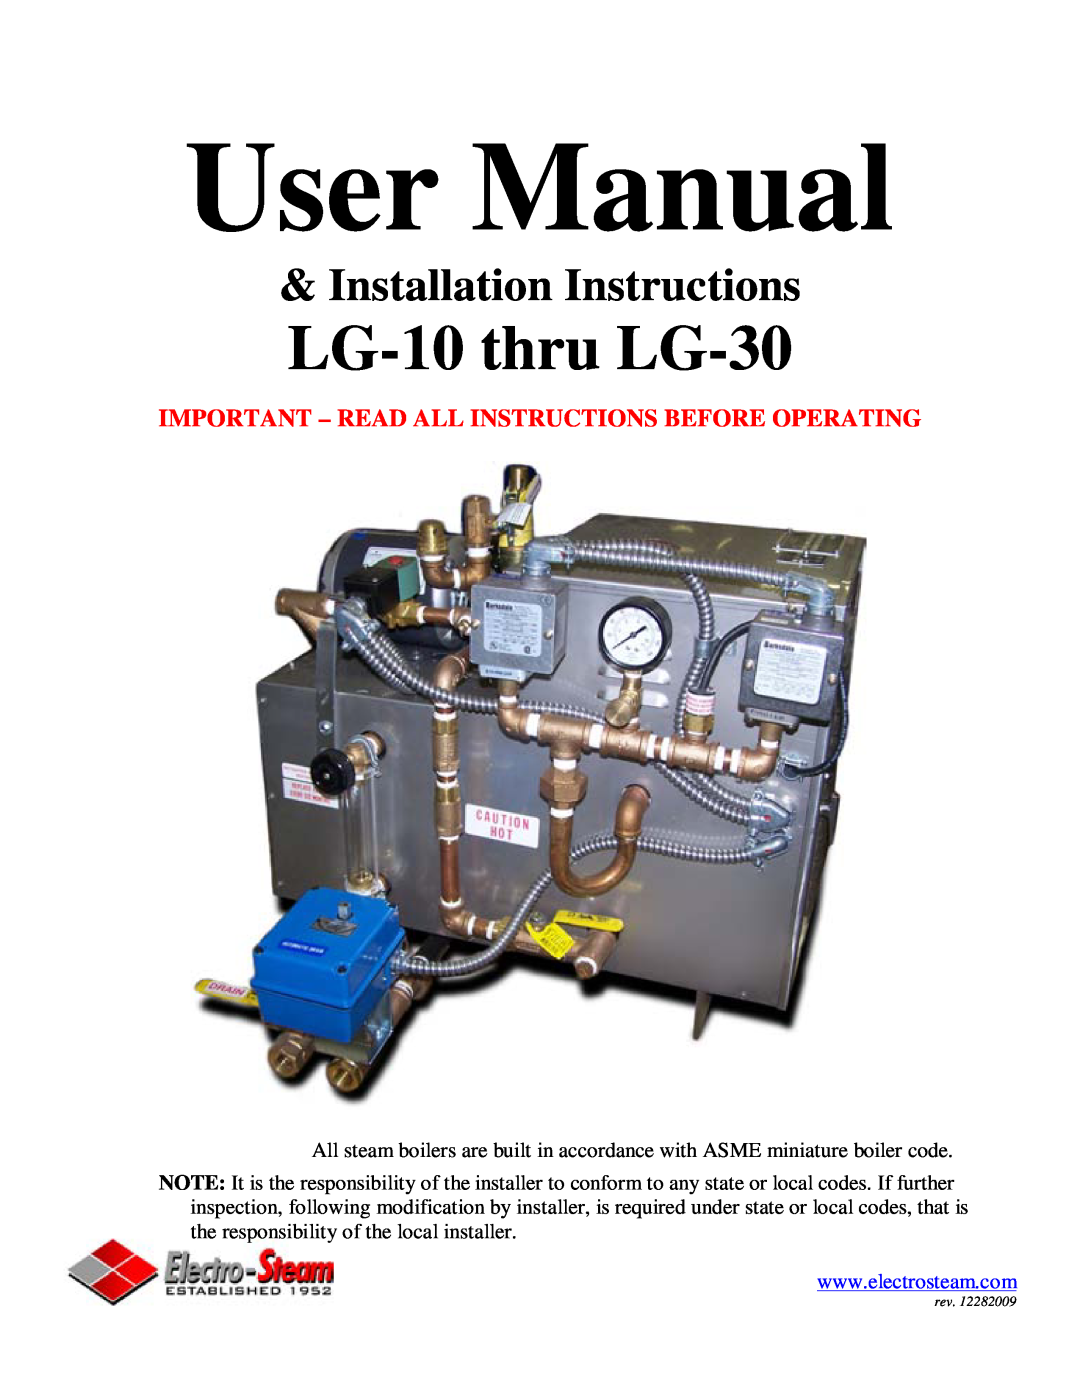 LG Electronics user manual User Manual, LG-10 thru LG-30, Installation Instructions 